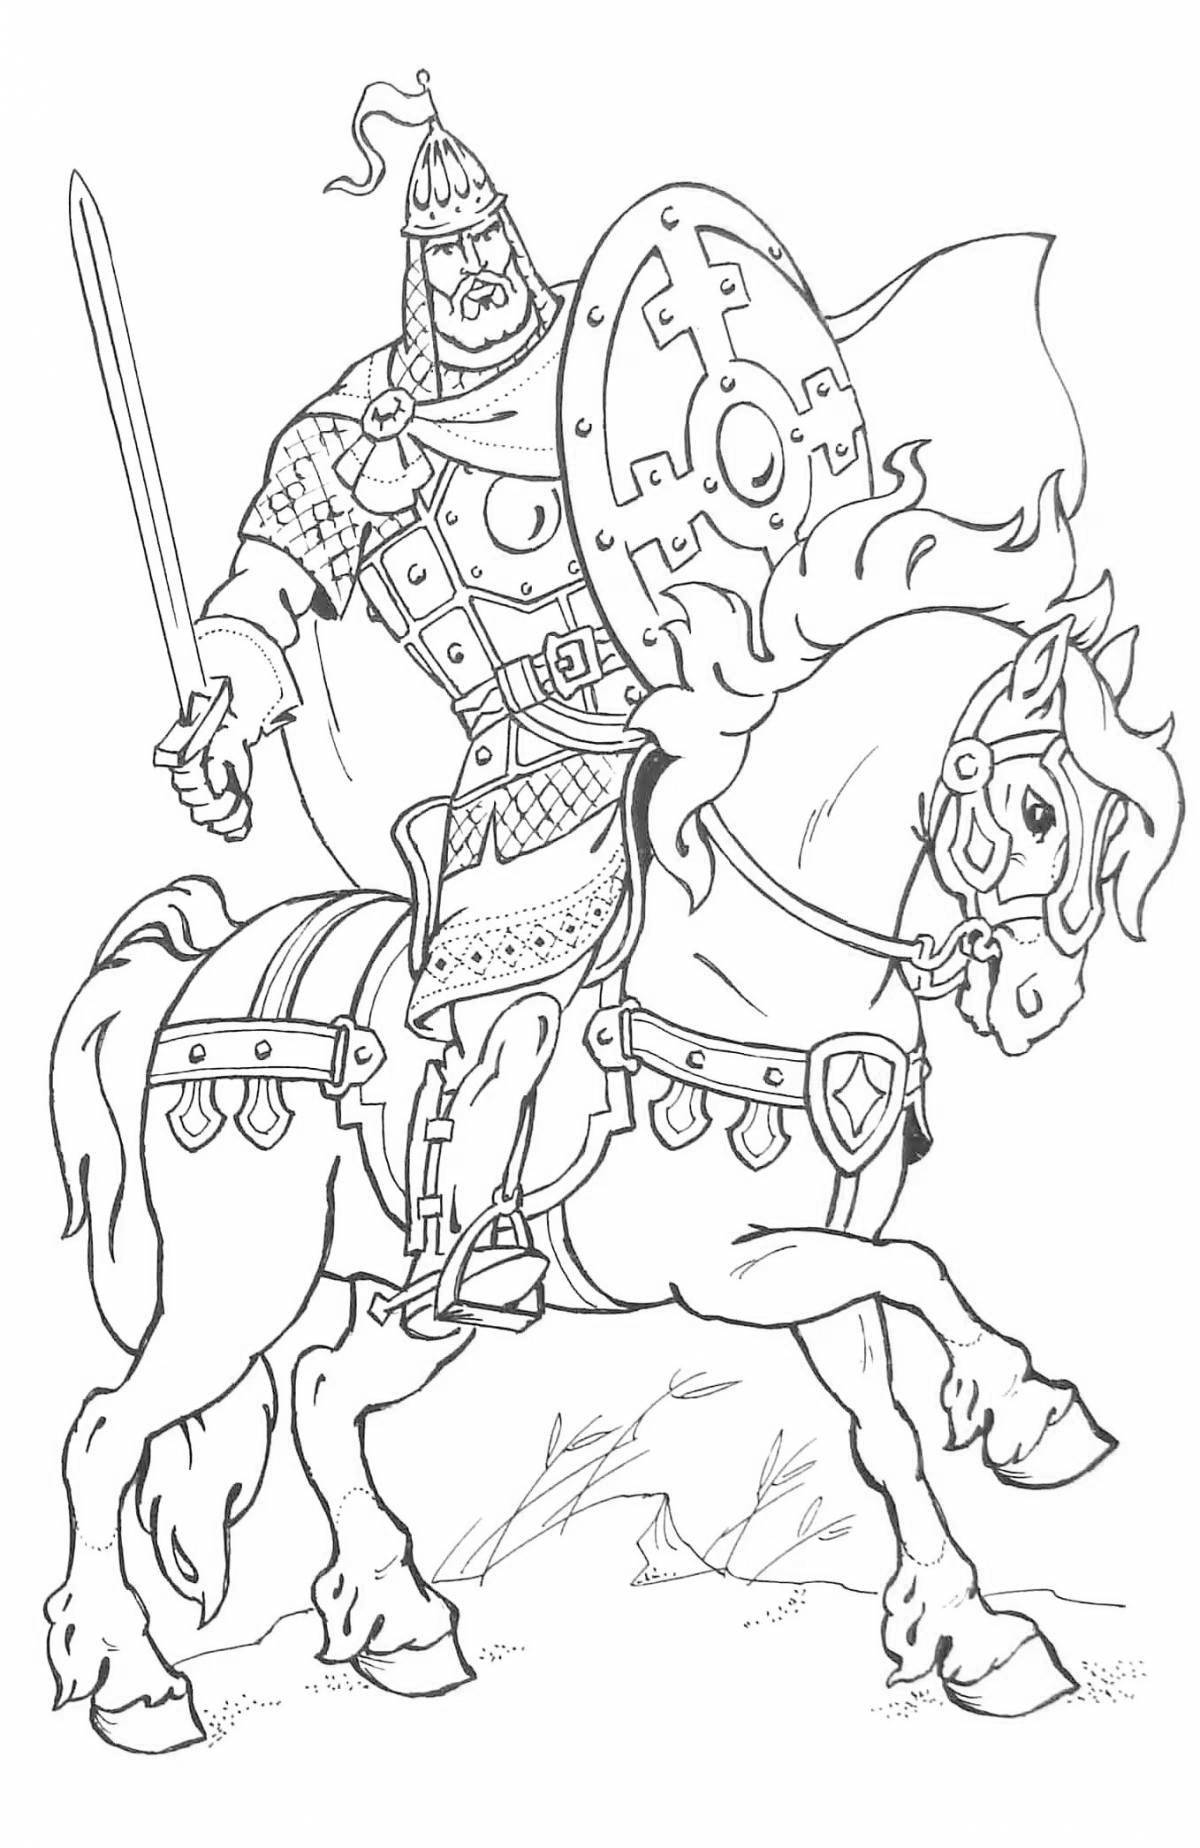 The benevolent coloring hero on horseback